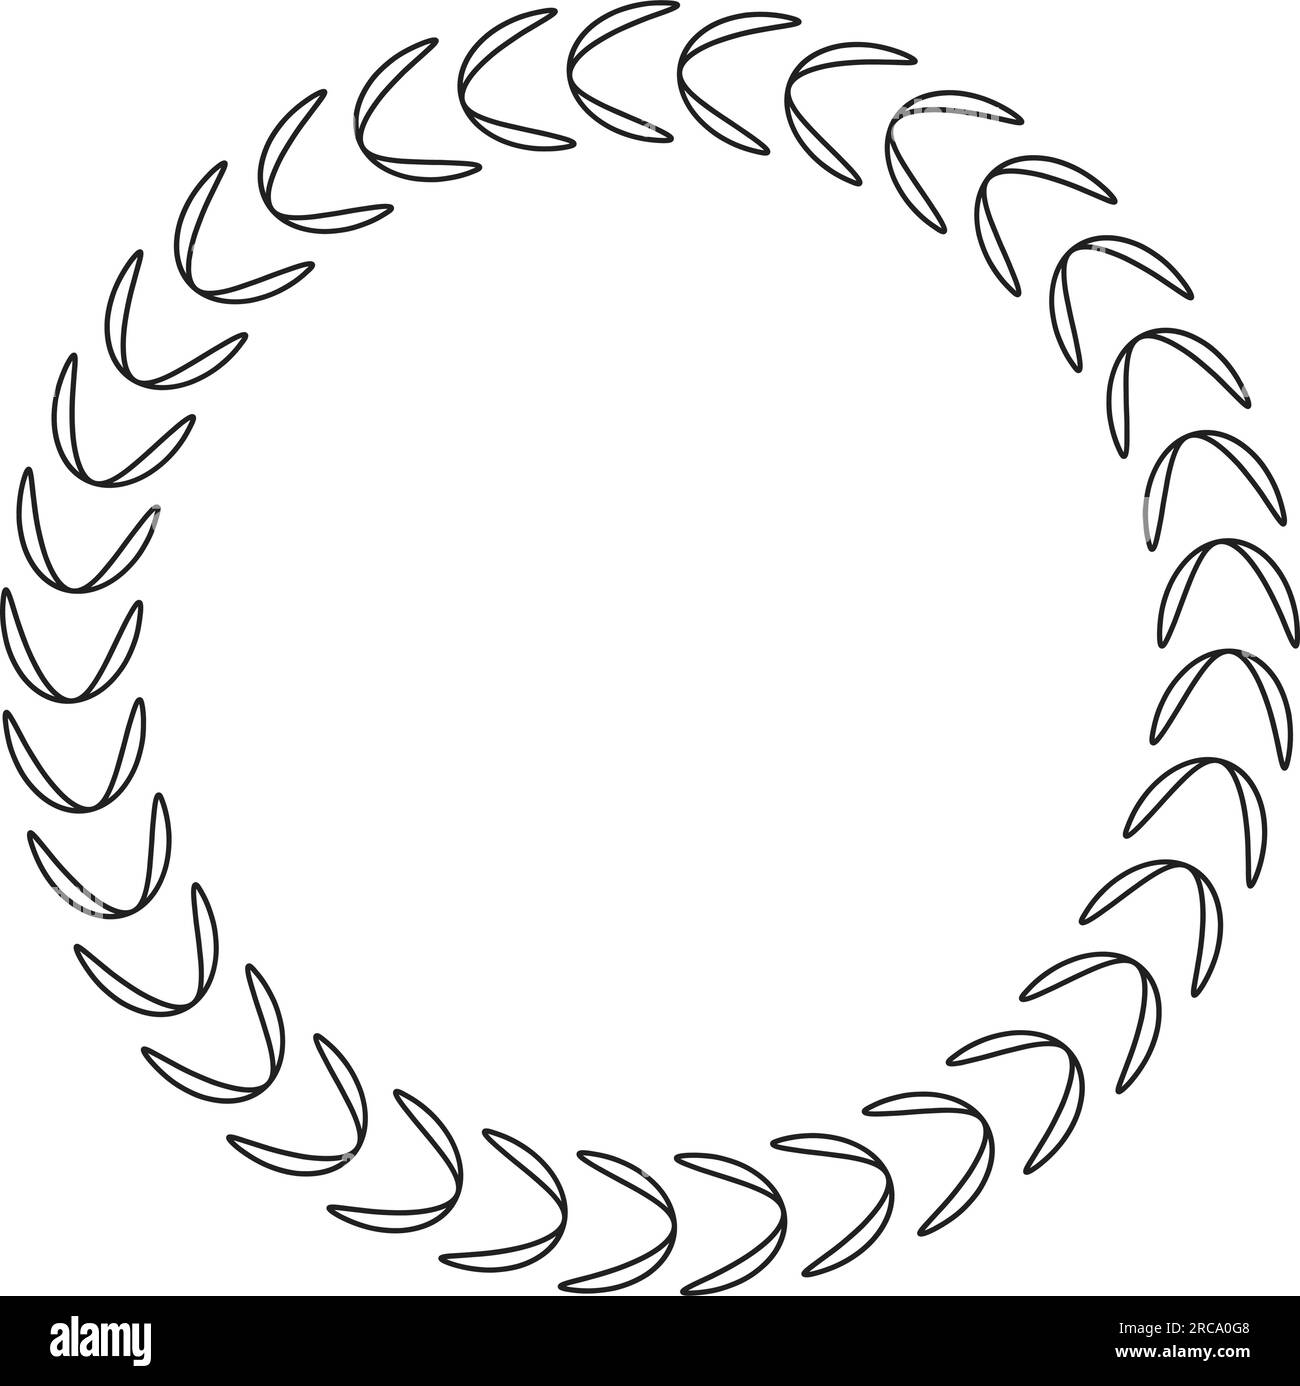 Circle frame round border design shape icon for decorative vintage